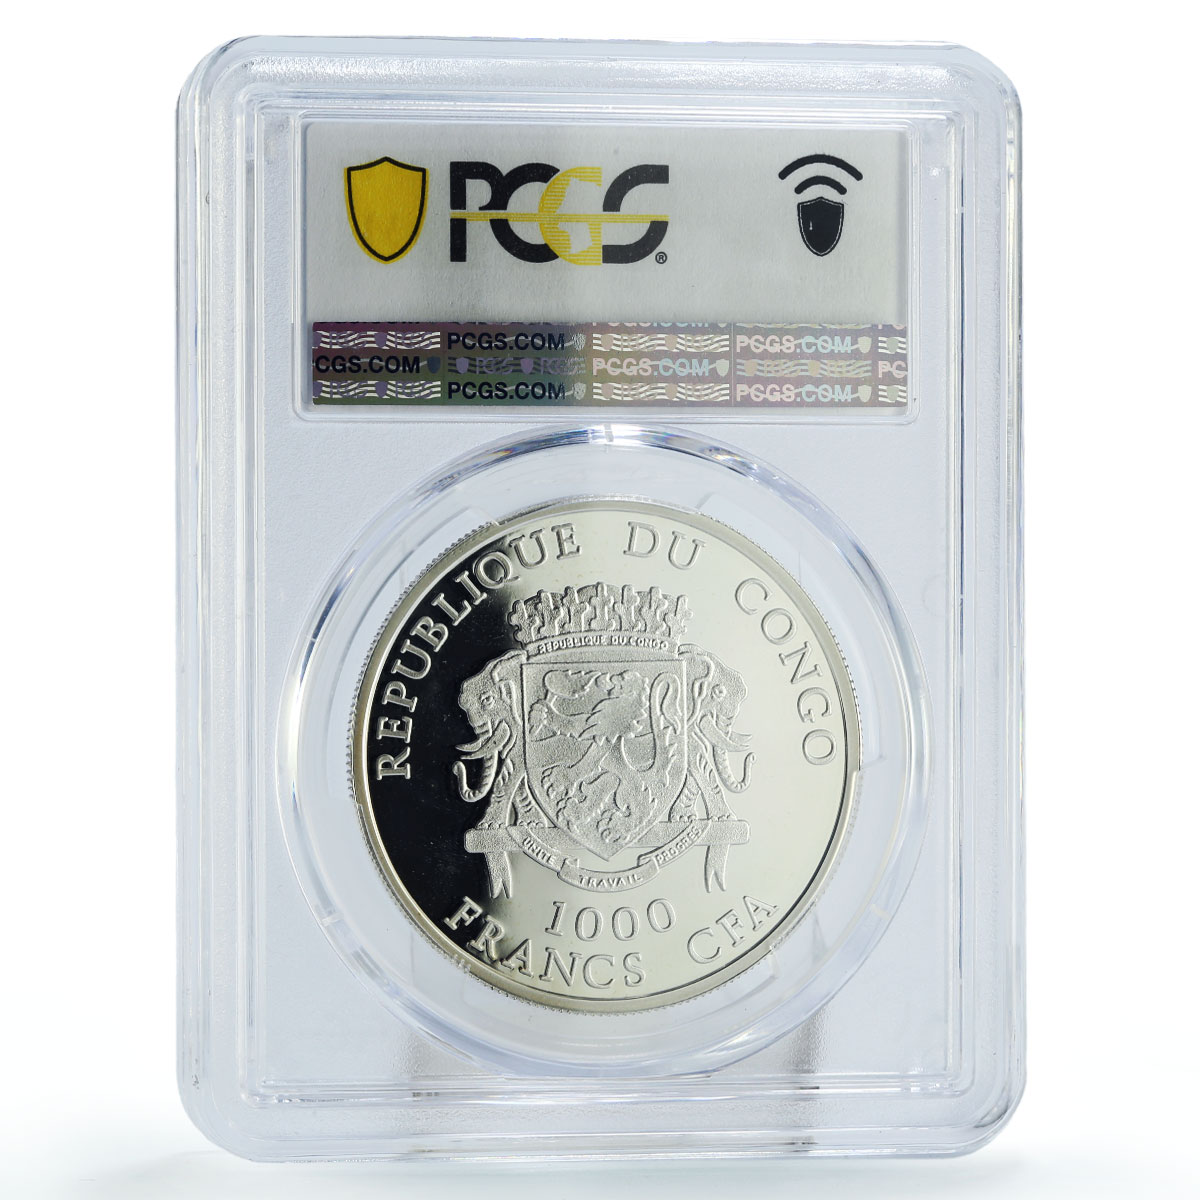 Congo 1000 francs Conservation Megaptera Whale Fauna PR68 PCGS silver coin 2009